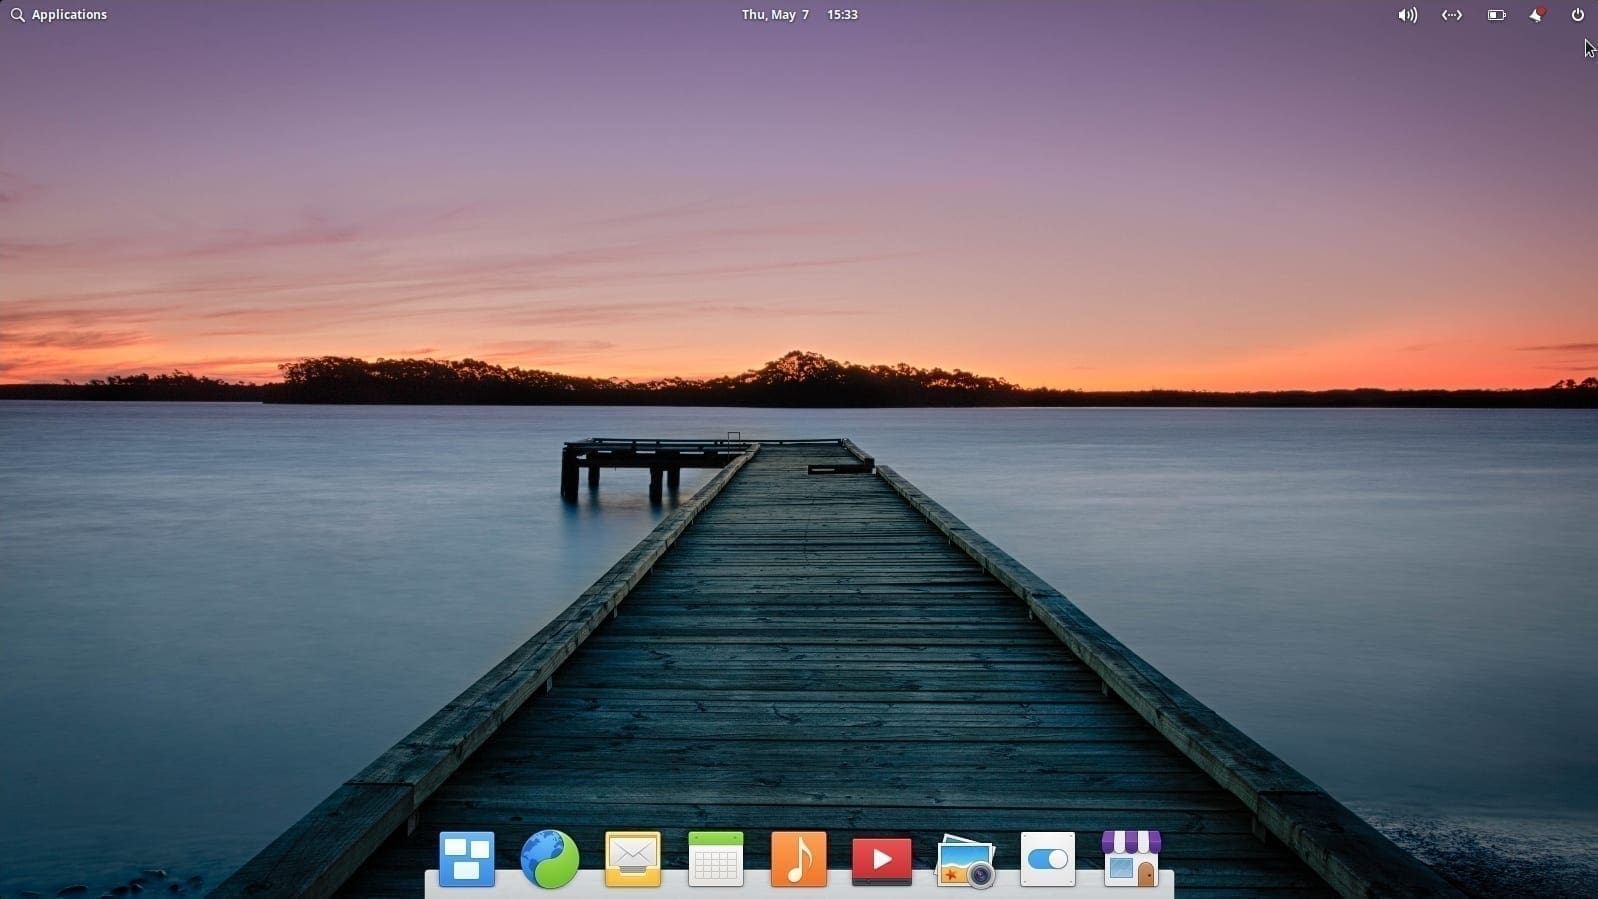 elementary OS 5.1.4 desktop